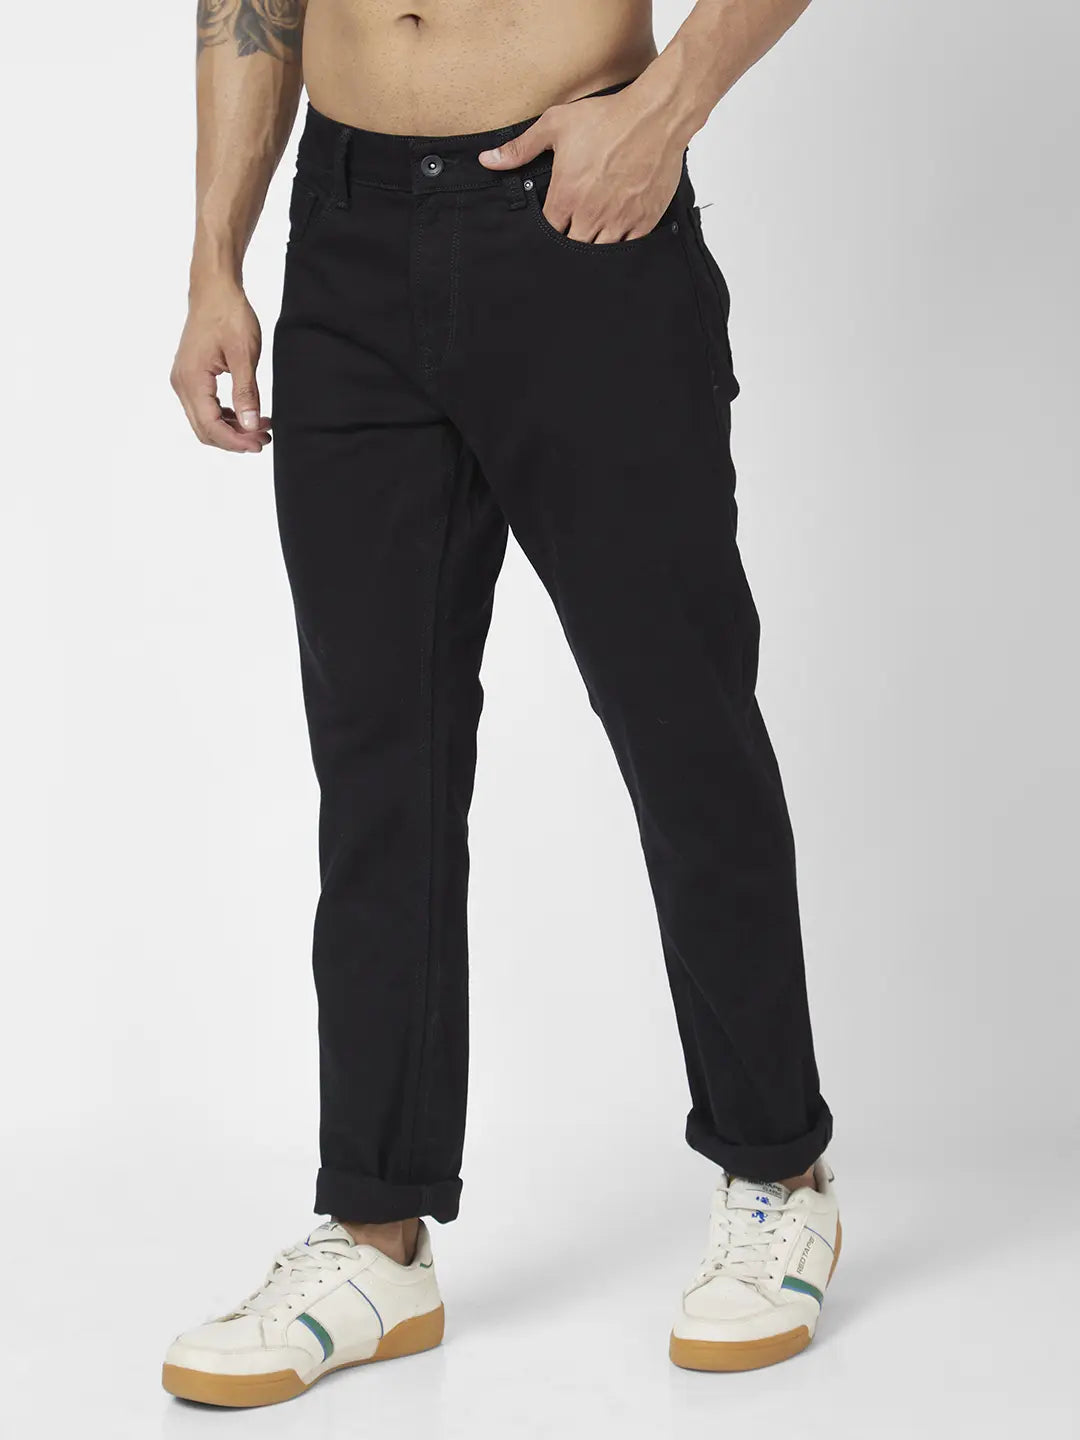 Spykar Men Black Cotton Stretch Regular Fit Narrow Length Clean Look Mid Rise Jeans (Rover)